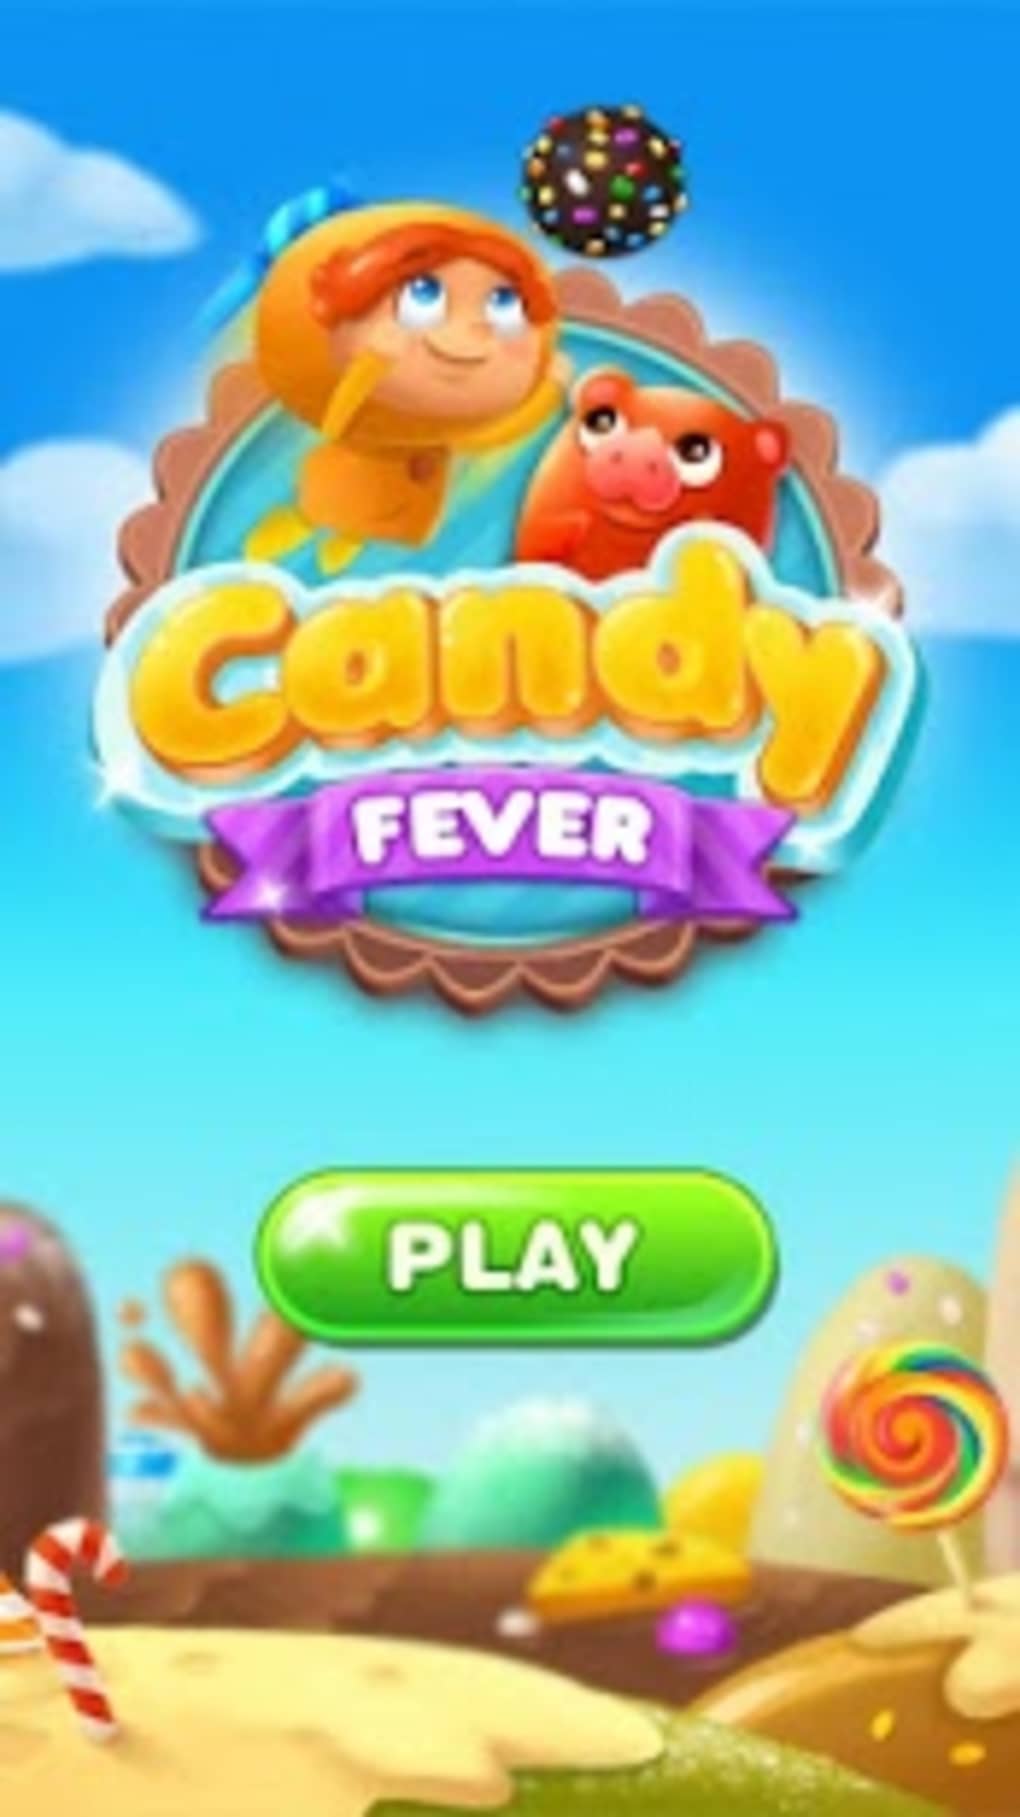 Кэнди андроид. Candy Fever. Андроид конфеты лихорадка 2. Fever игра. Игра с конфетами.